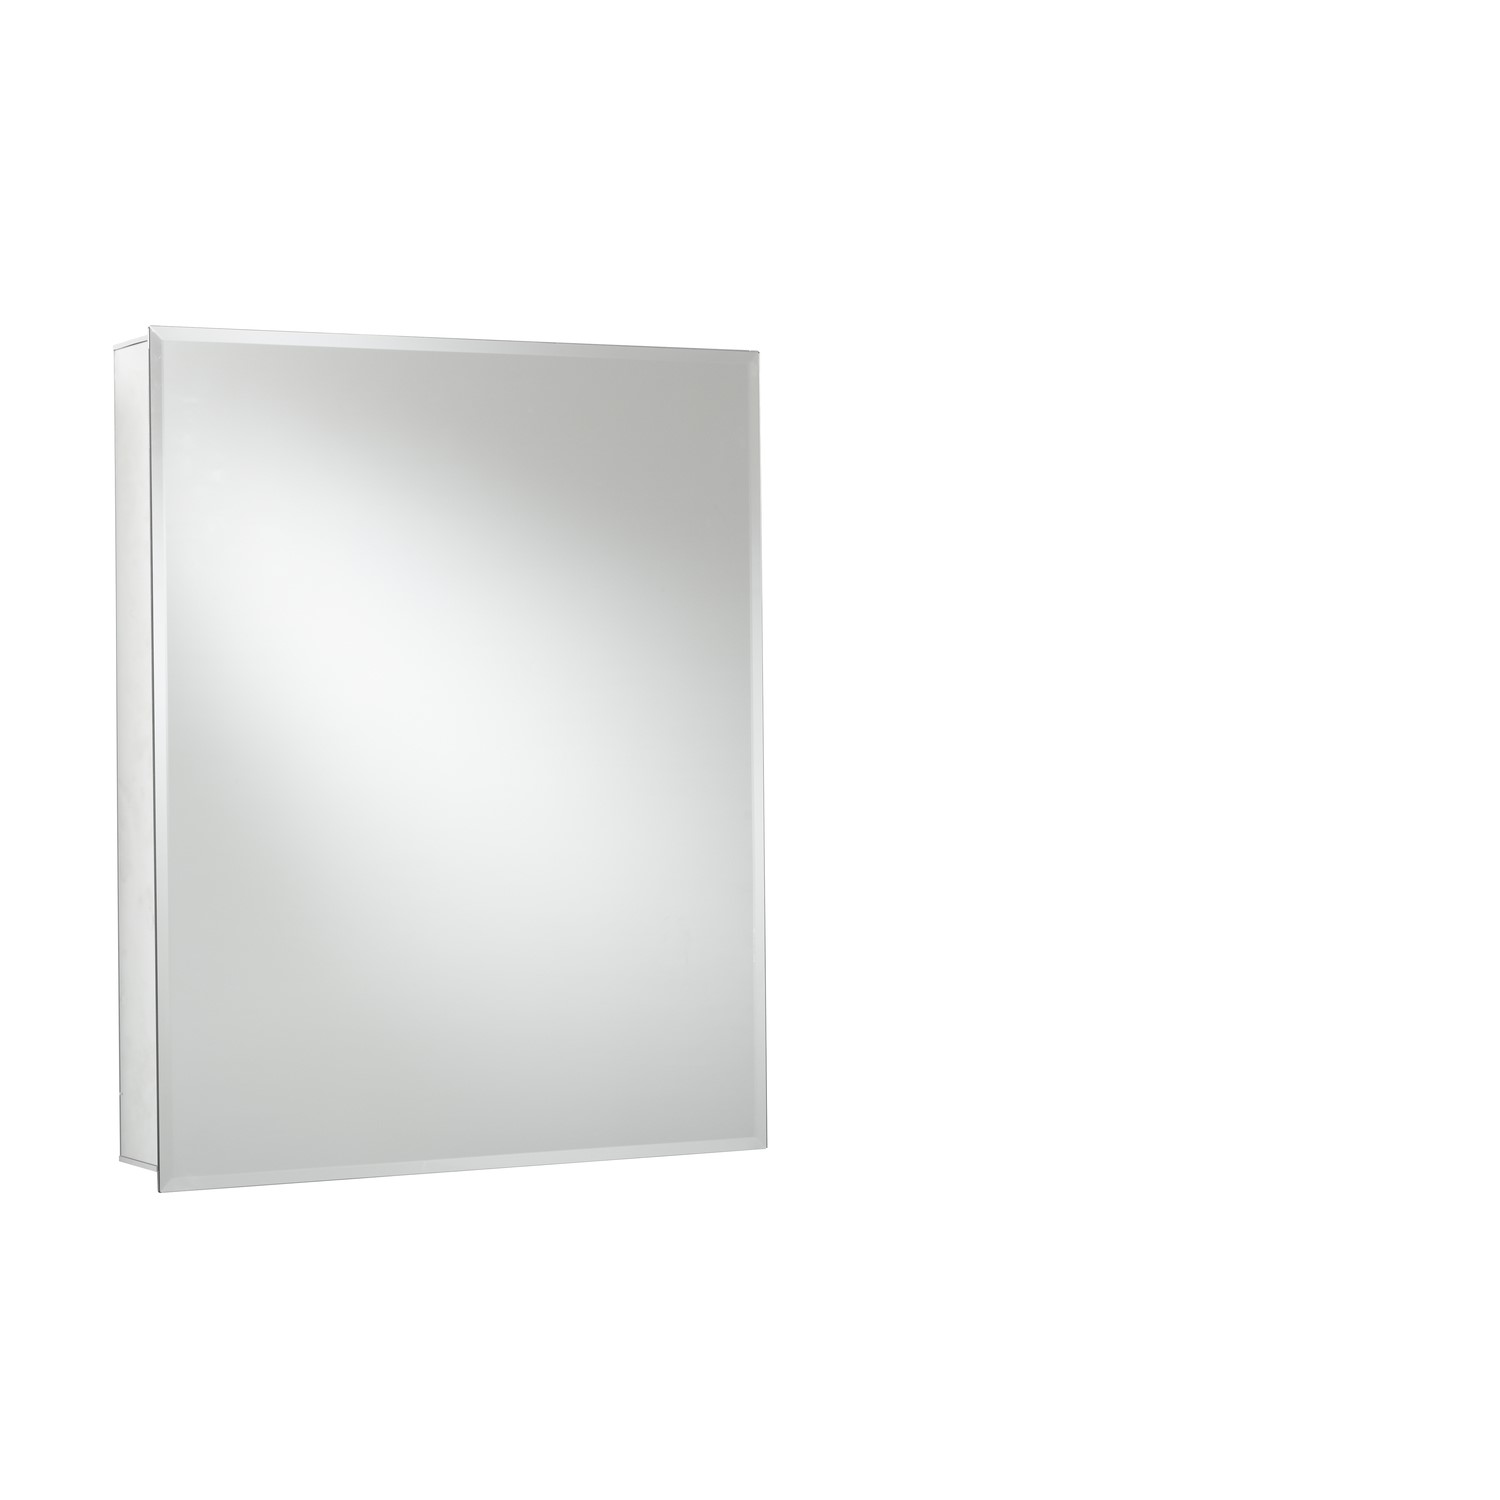 Chrome Mirrored Wall Bathroom Cabinet 510 x 660mm - Croydex